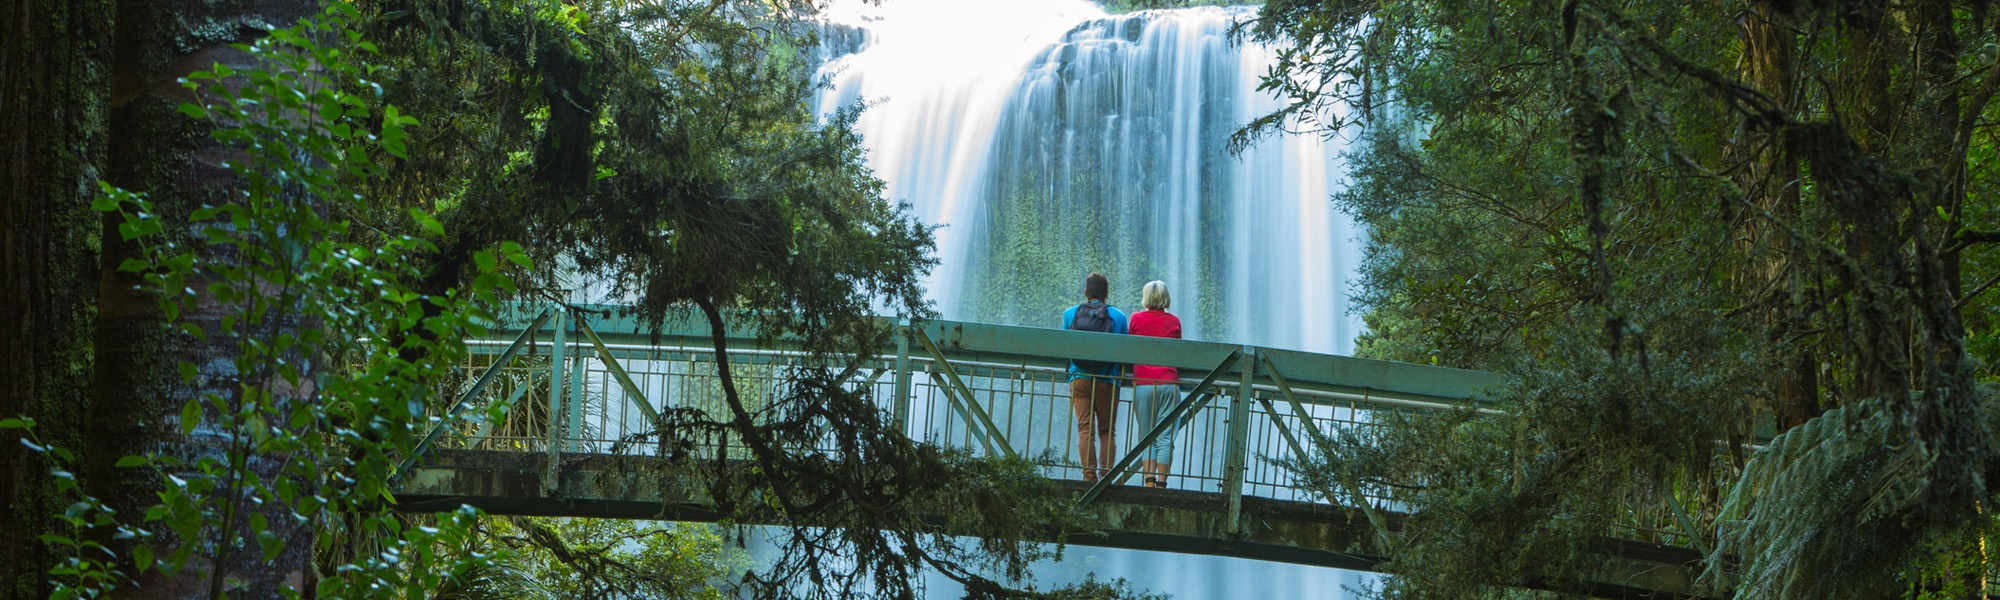 Discover-and-Explore-Content-page.-Waterfalls-header.-Otuihau-Whangarei-Falls.jpg